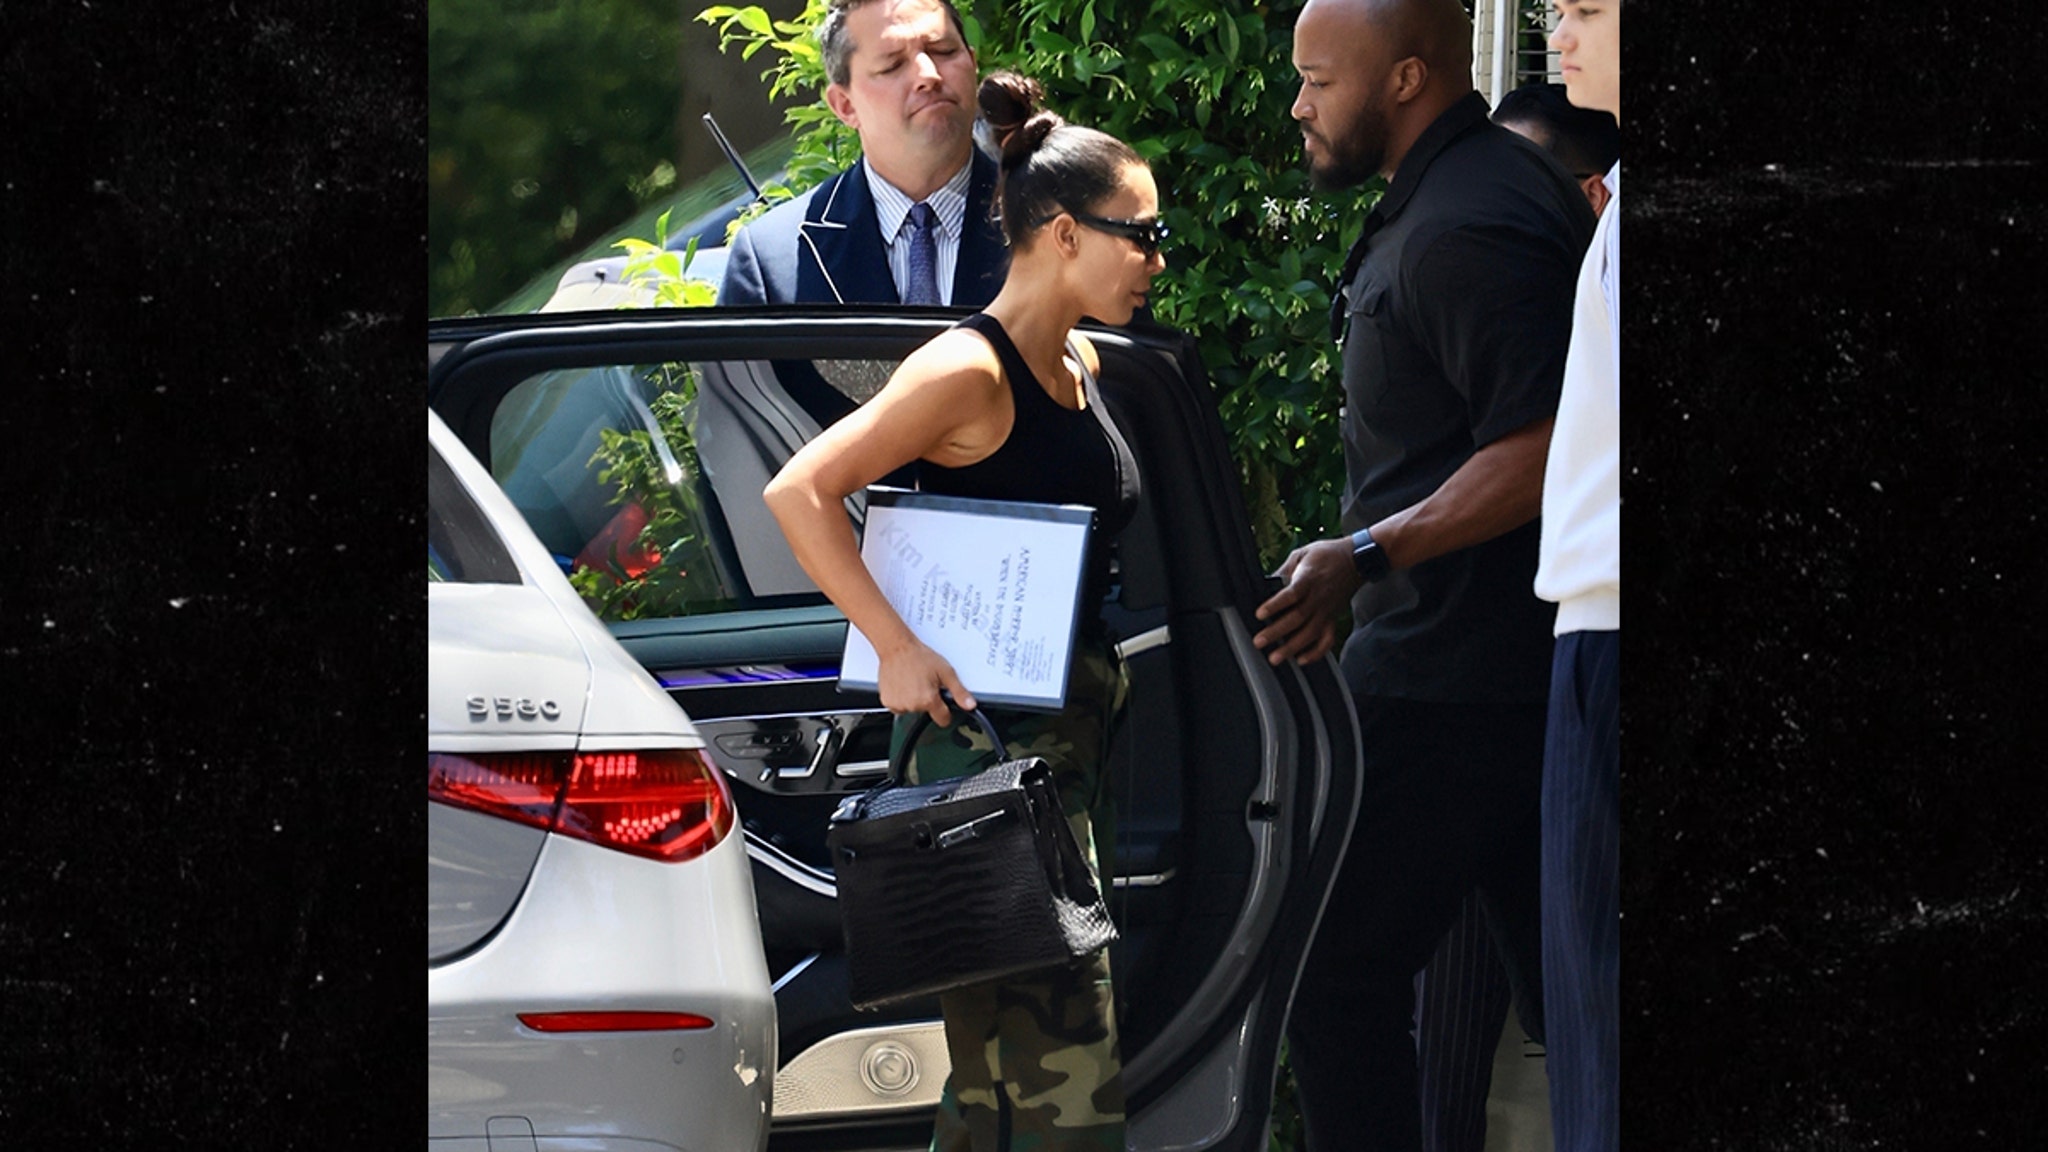 Kim Kardashian Heads Into Meeting Holding ‘AHS’ Script